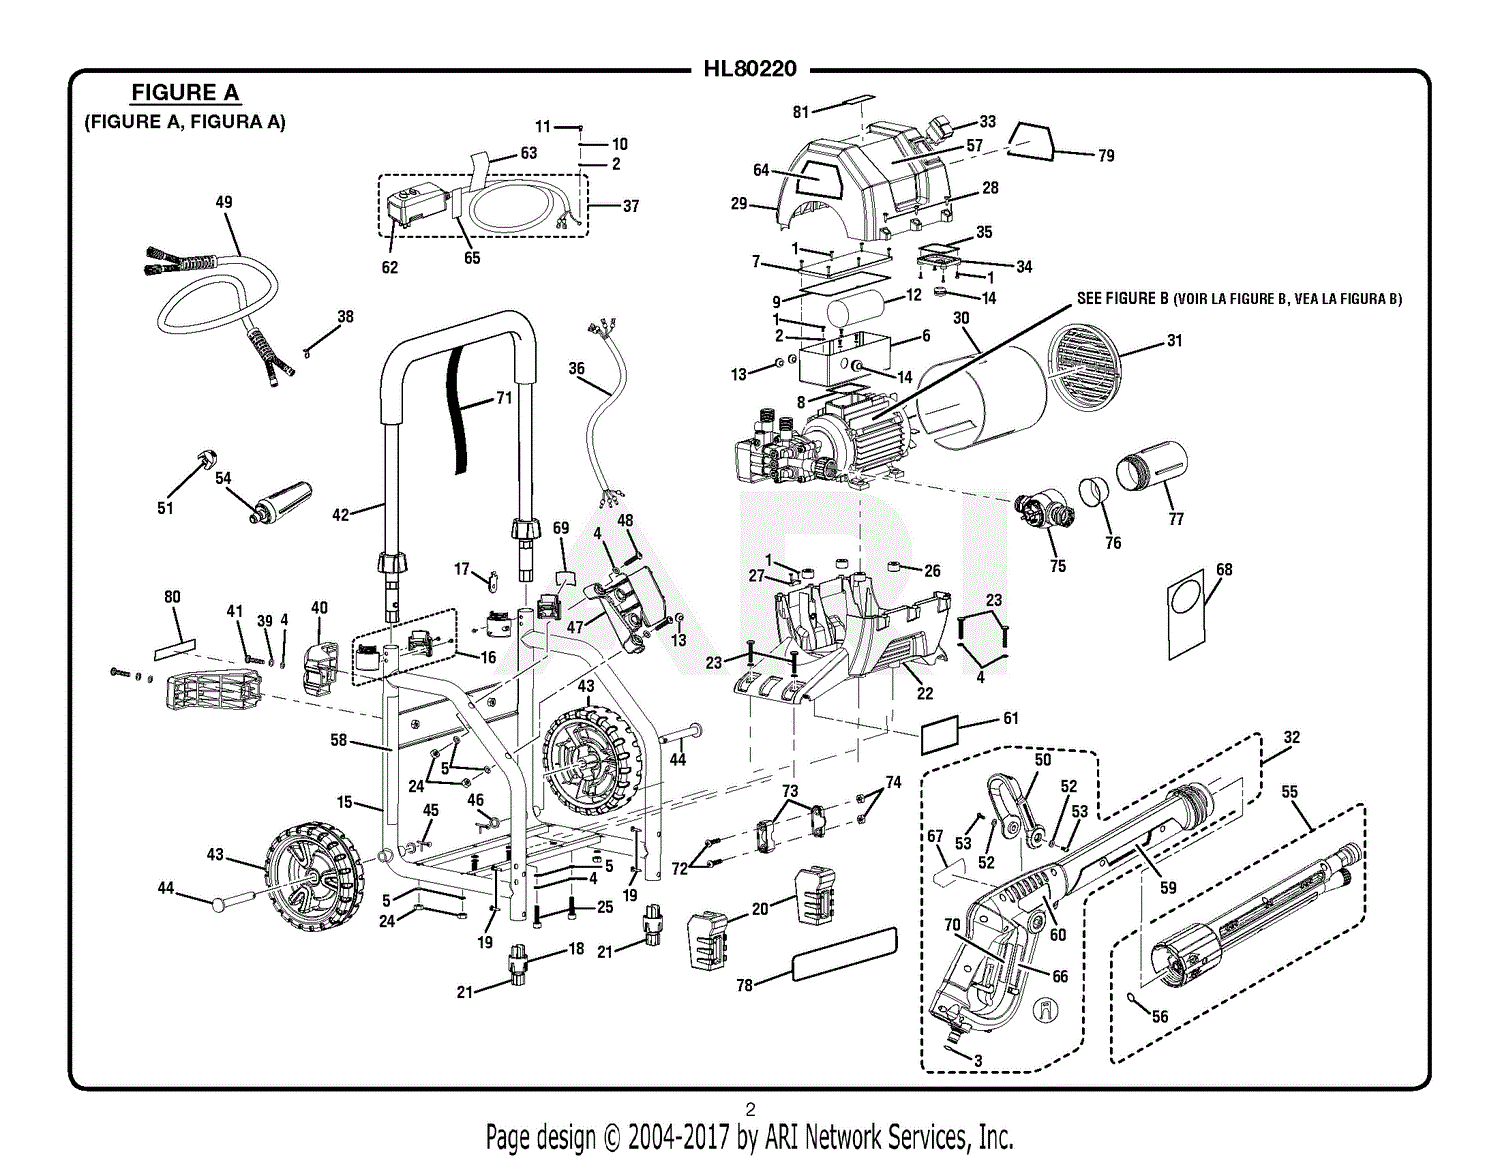 Homelite Hl80220 Electric Pressure Washer Parts Diagram